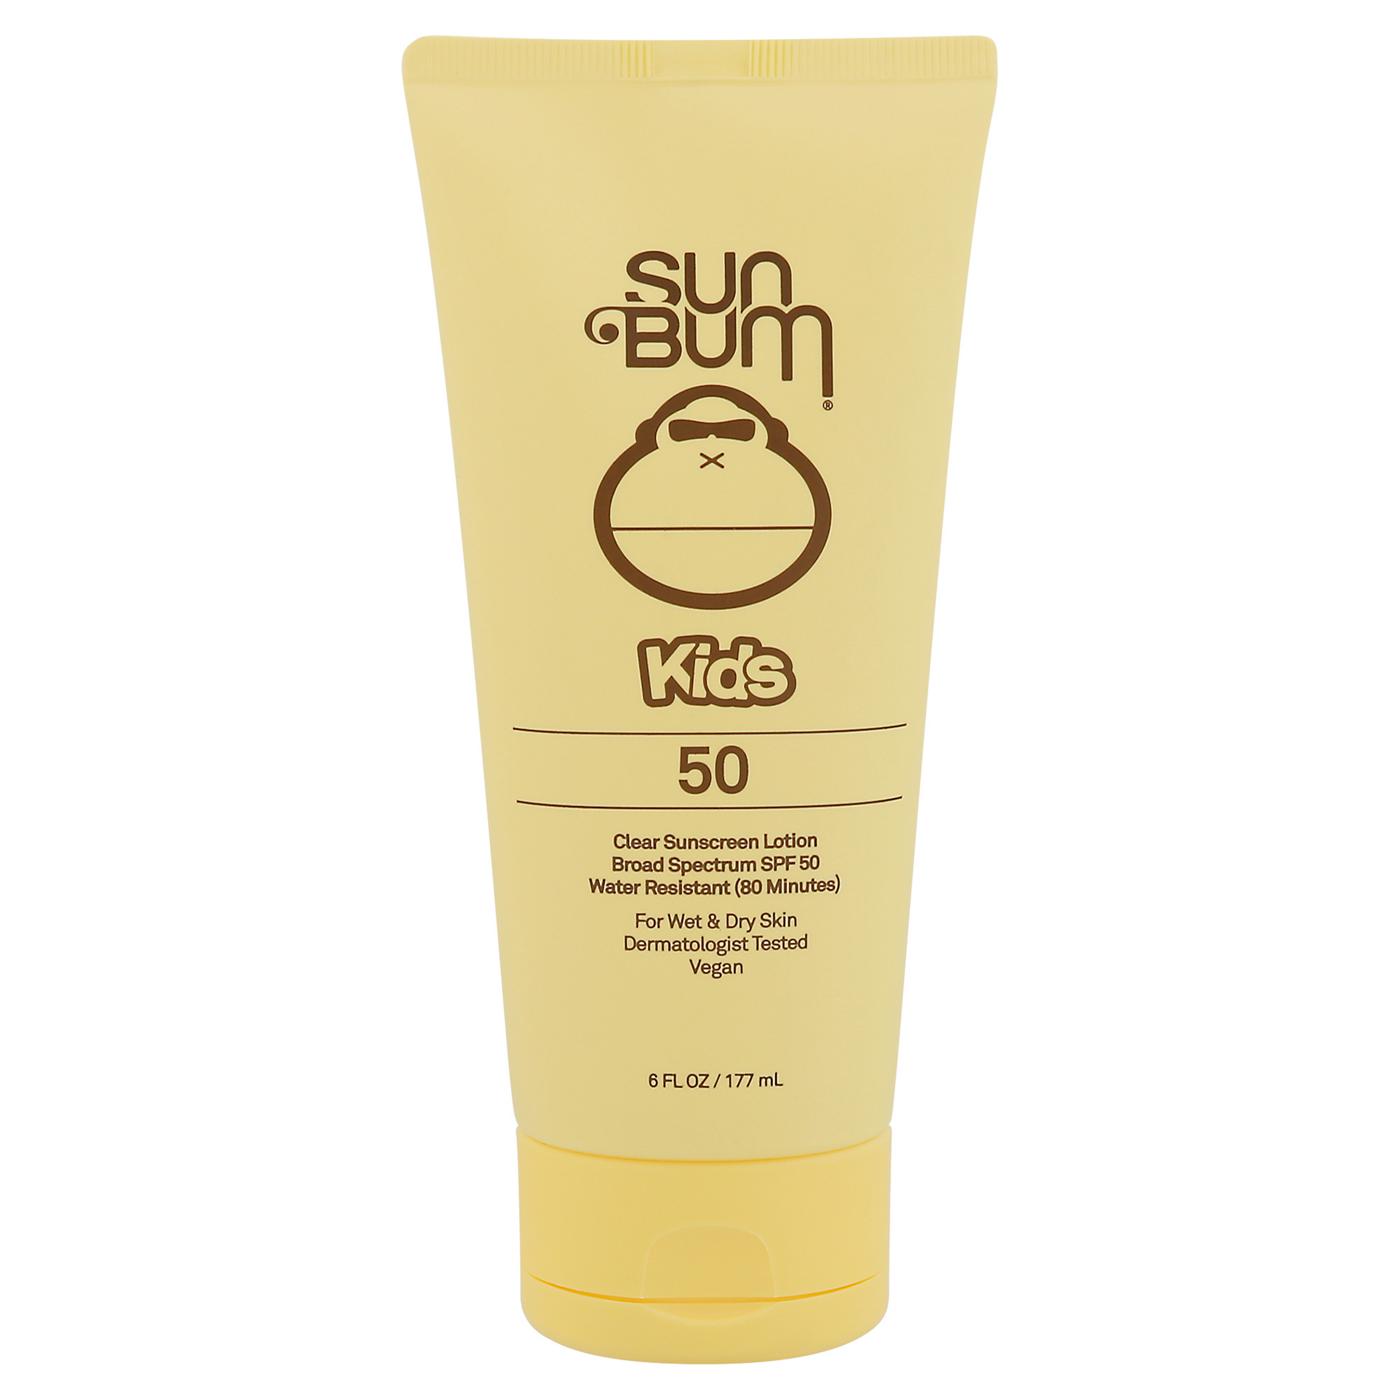 Sun Bum Kids Clear Sunscreen Lotion SPF 50; image 1 of 2